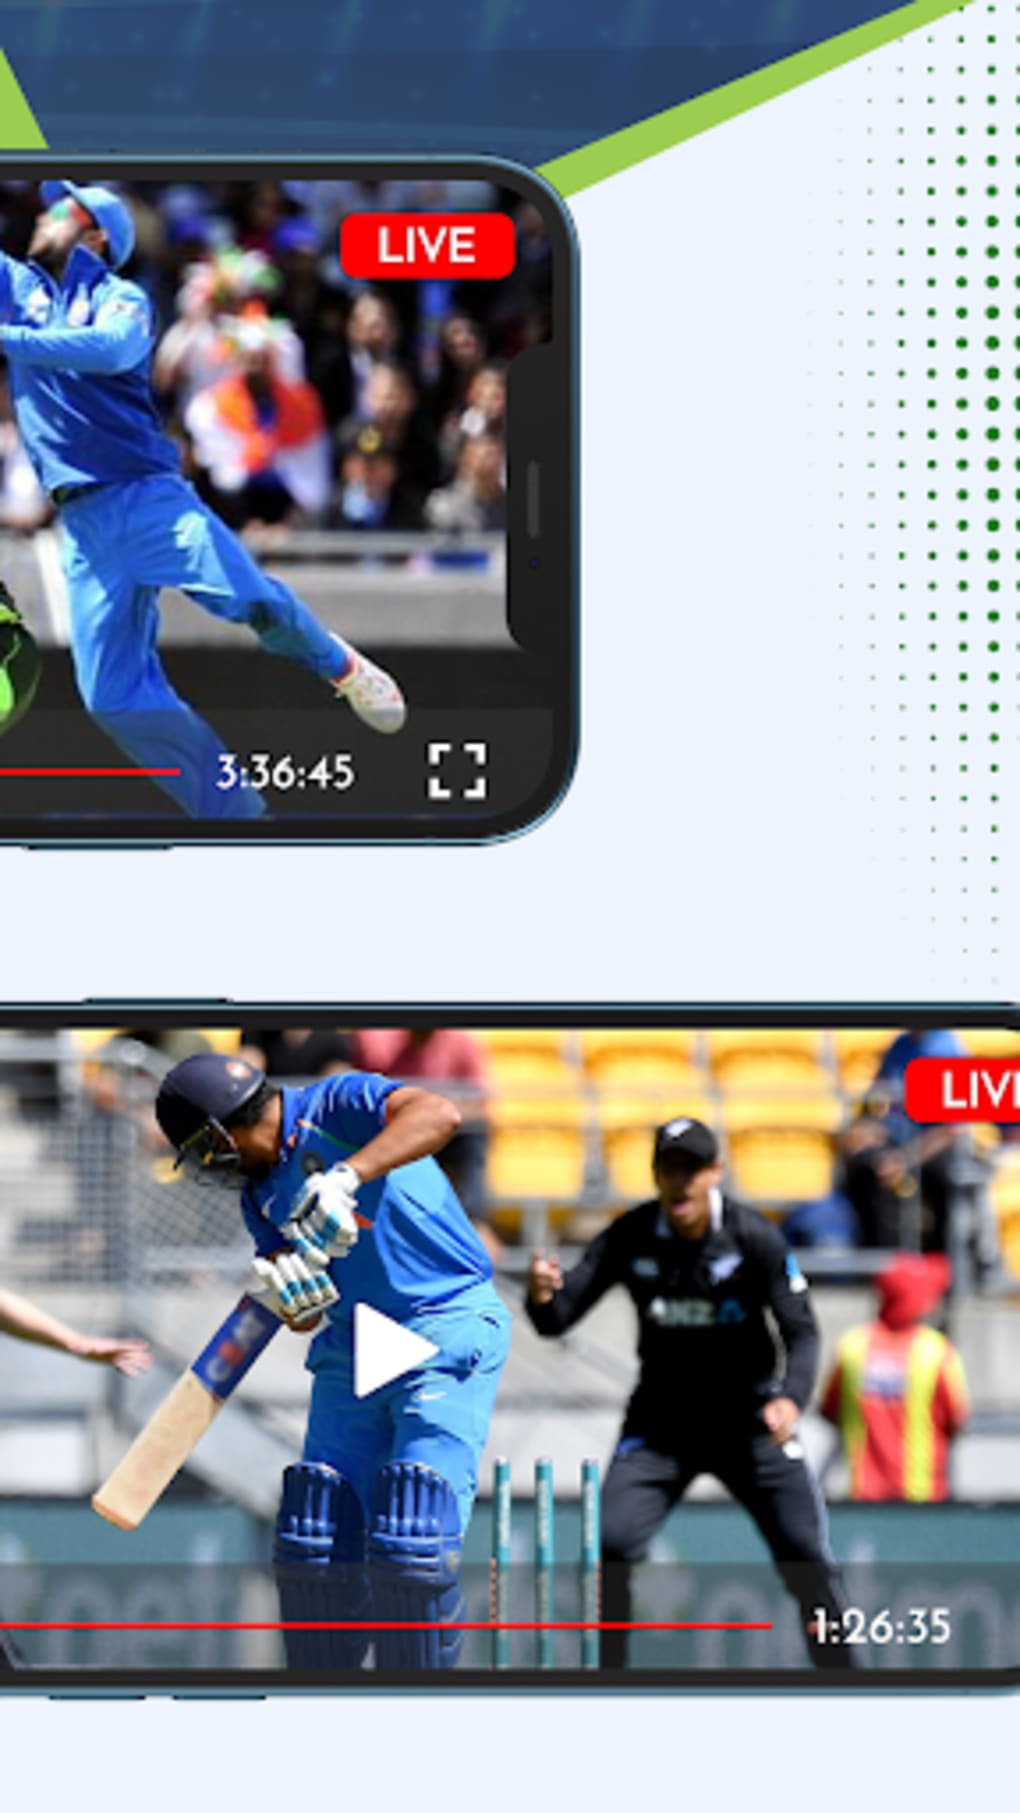 mobile cricket tv